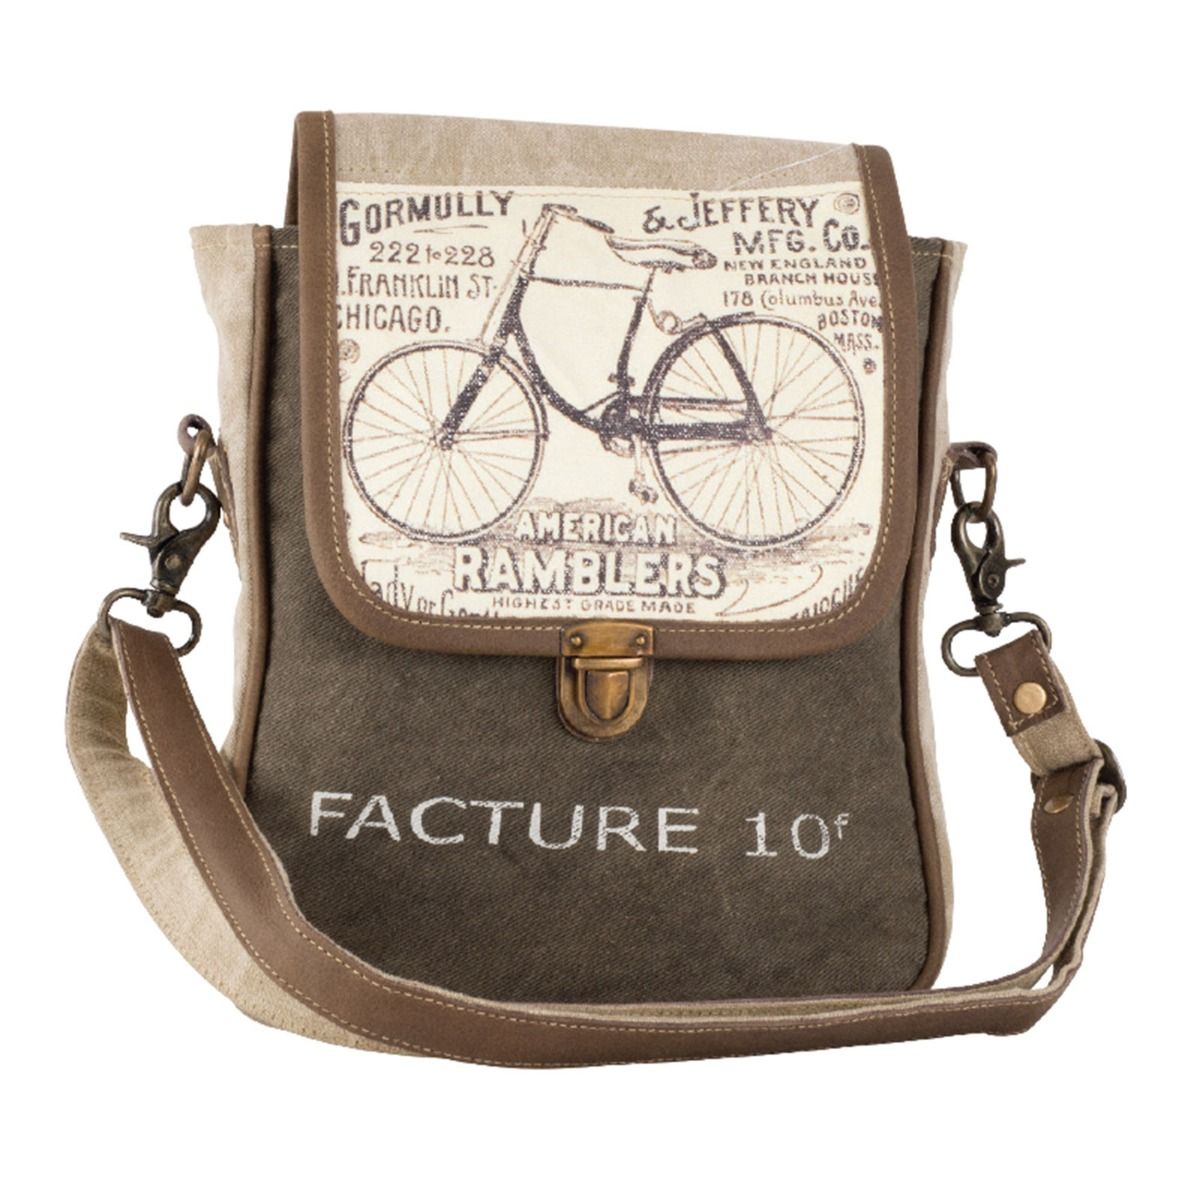 Franklin Genuine Leather Handbags